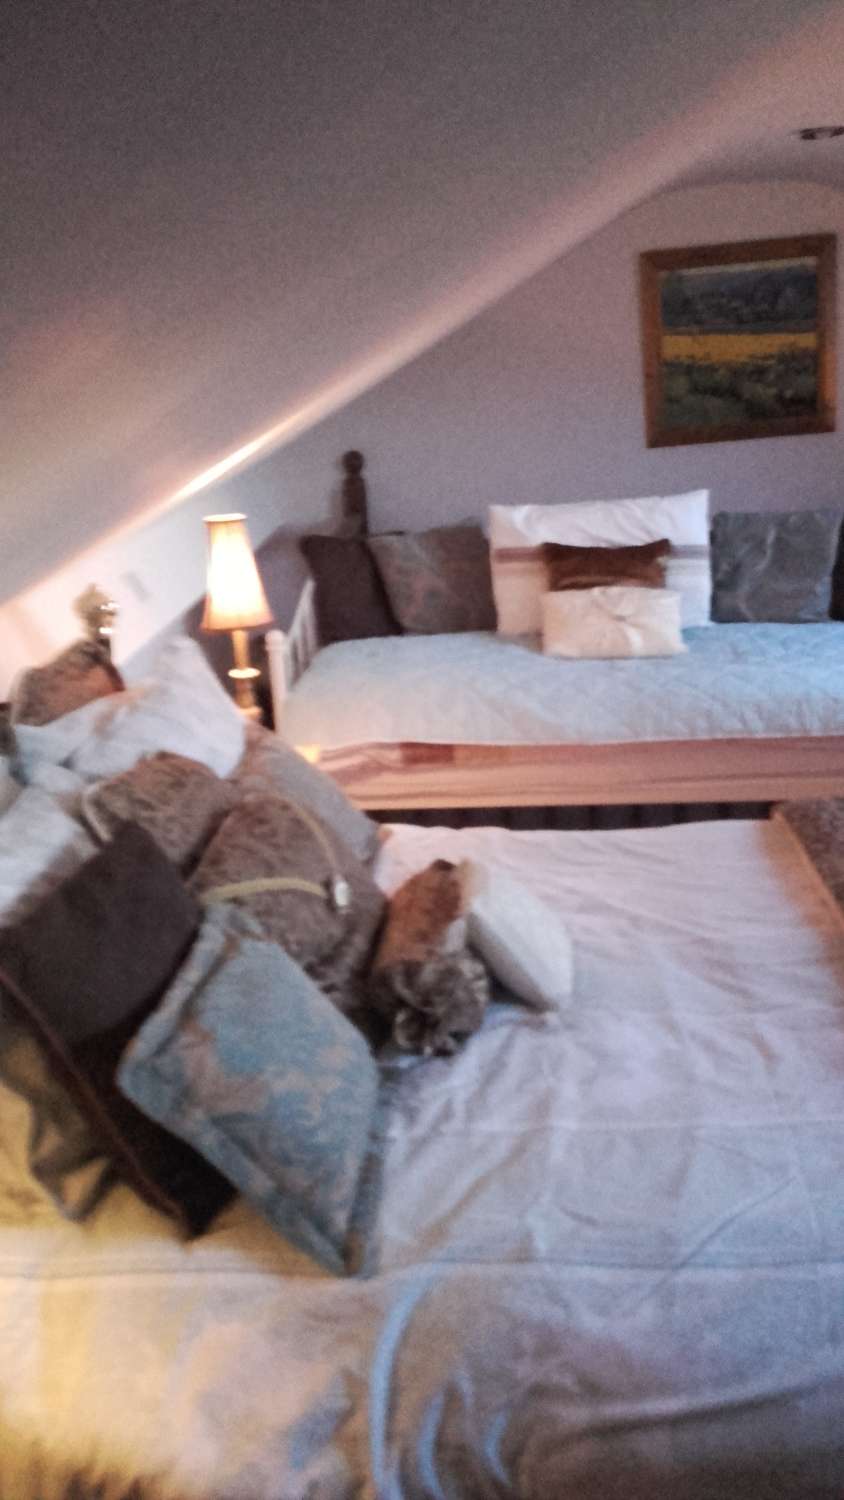 Three single beds room